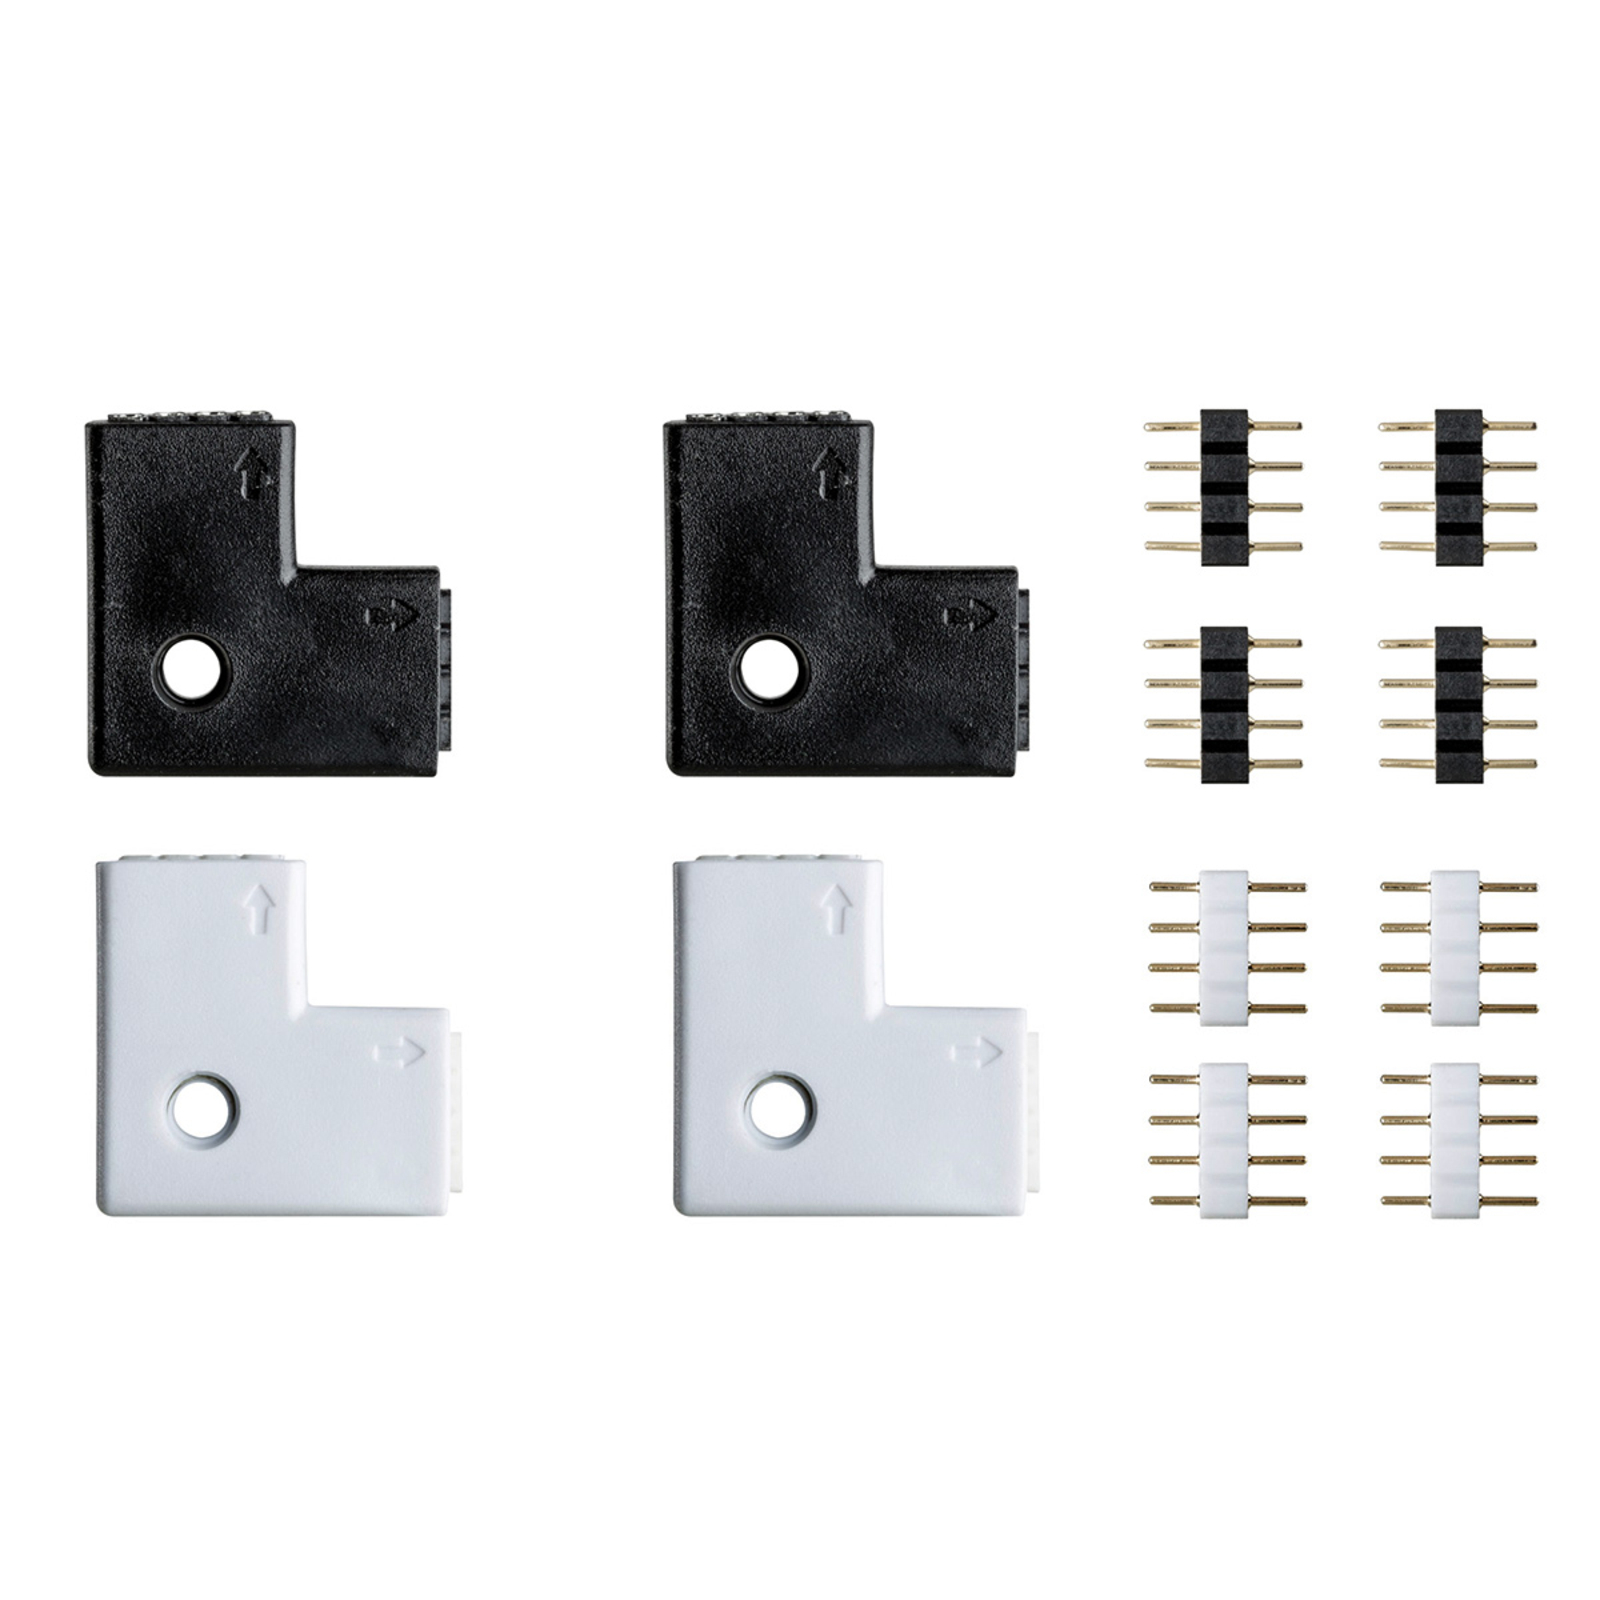 Set of 4 corner connectors for Caja strip system